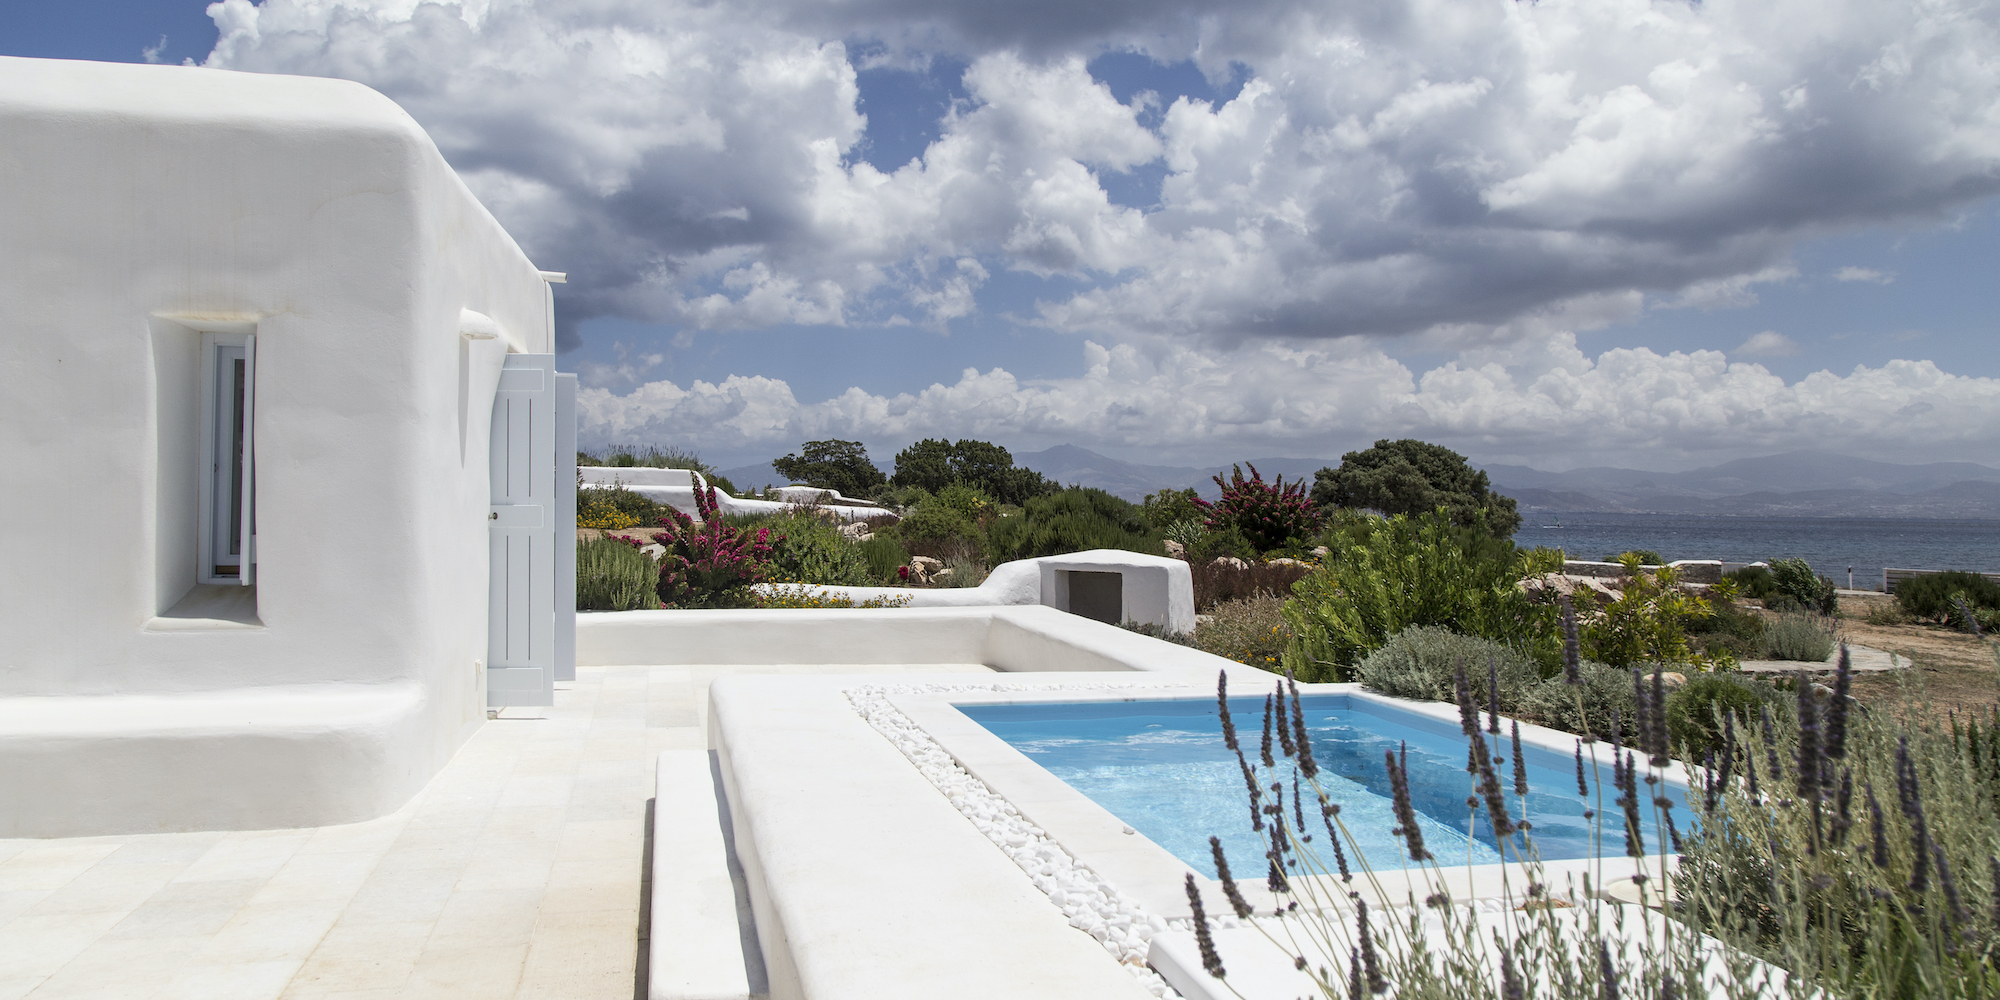 villas in paros greece : swimmingpool details